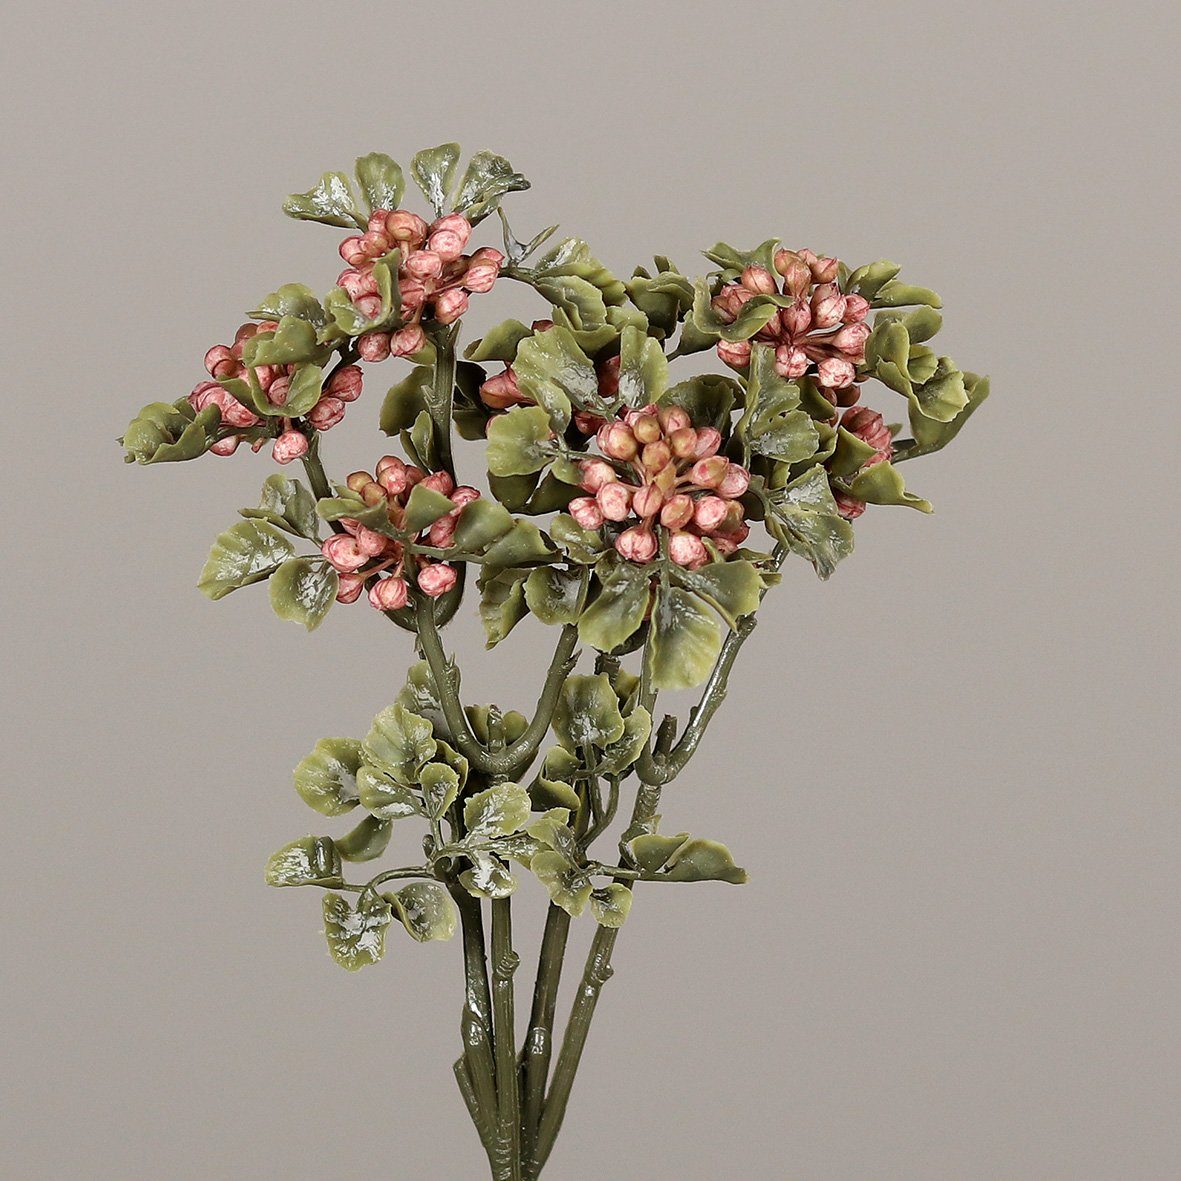 17 naturgetreu, Kunstblume Kunstblume rosa, Beeren DPI cm Bund, Wunderschöne